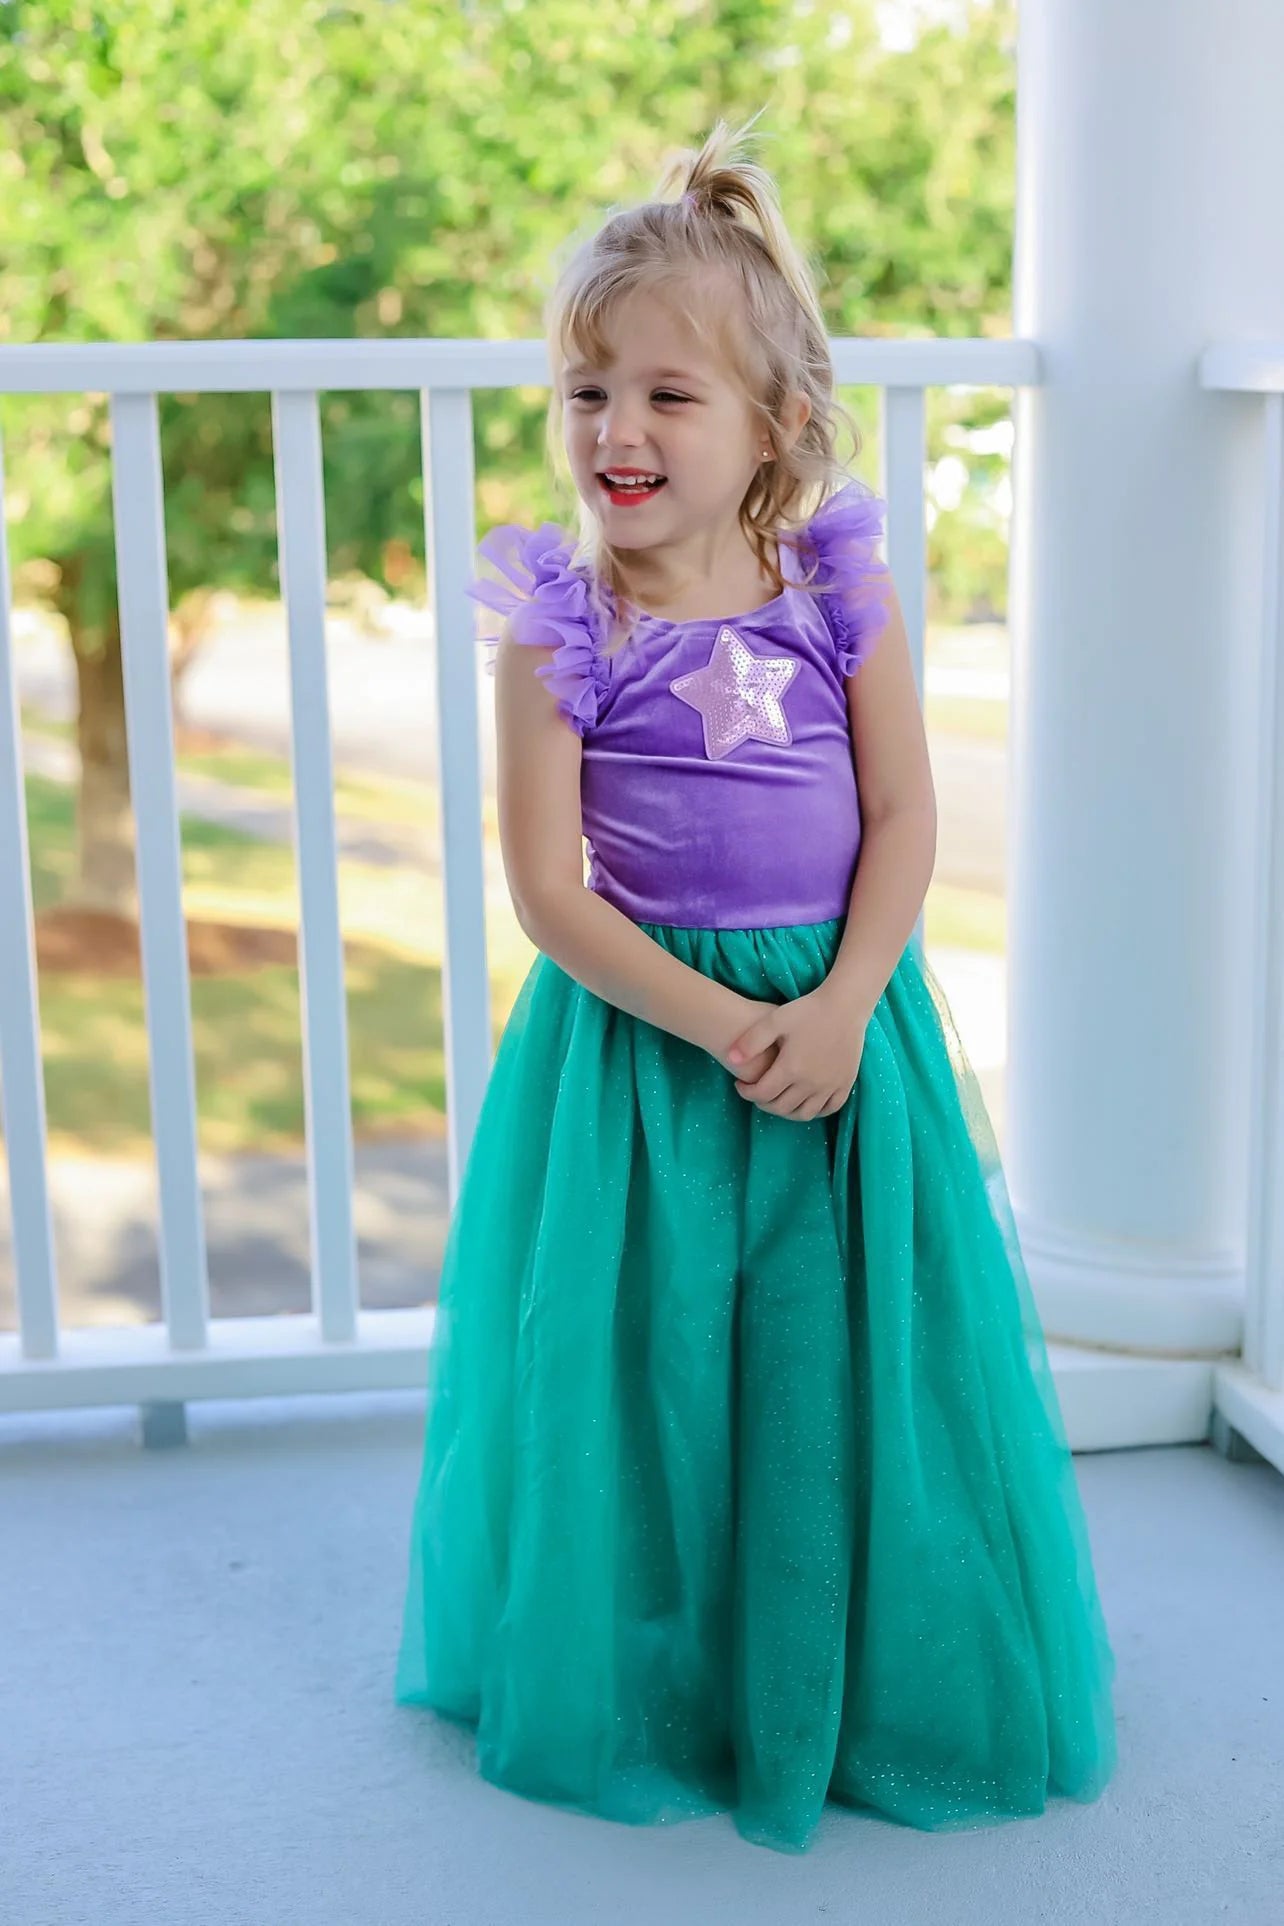 The Little Mermaid Princess Dress Up Costume